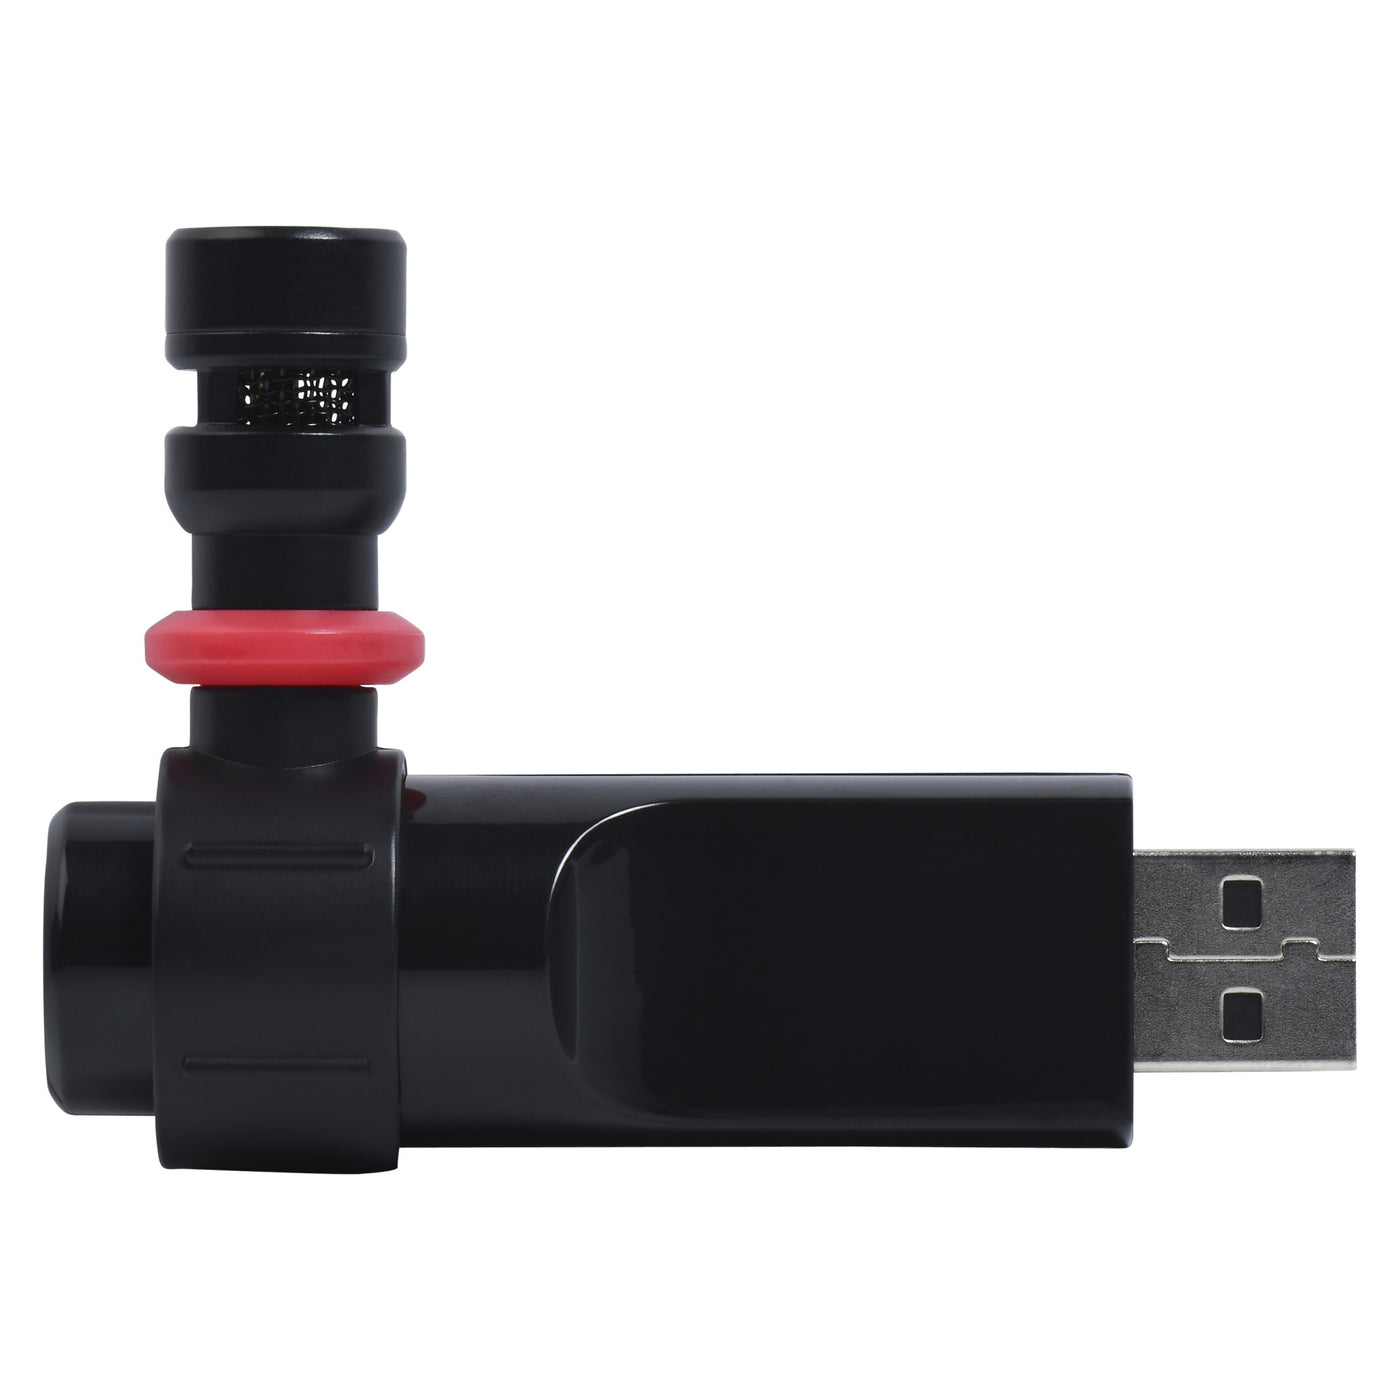 CAD Audio U9 USB Omnidirectional Condenser MiniMic (U9)